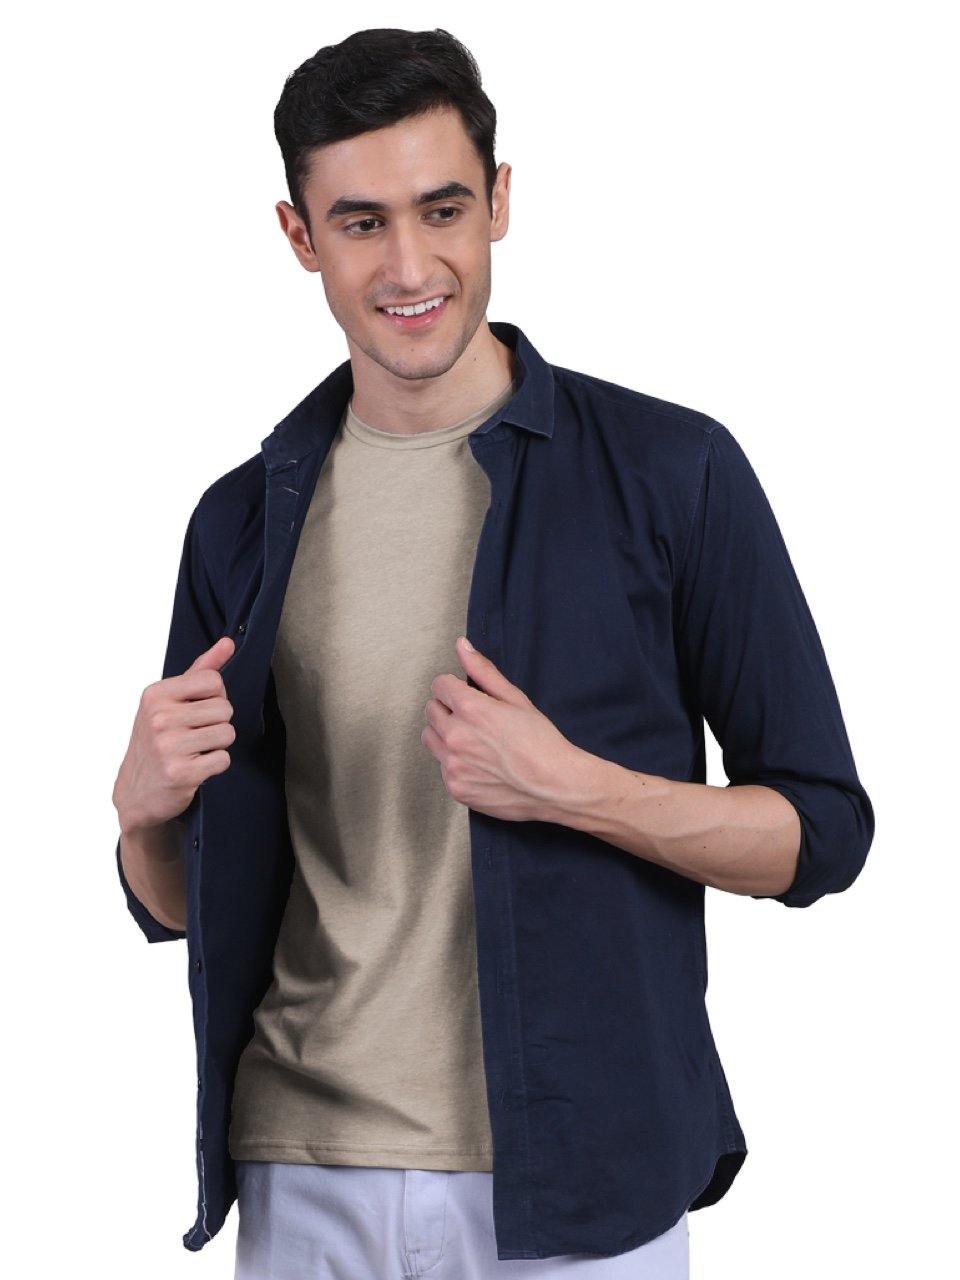 Men's Half Sleeves Bamboo T-shirt (Undershirt, Loungewear, Sleepwear) - Pack of 3 - freecultr.com